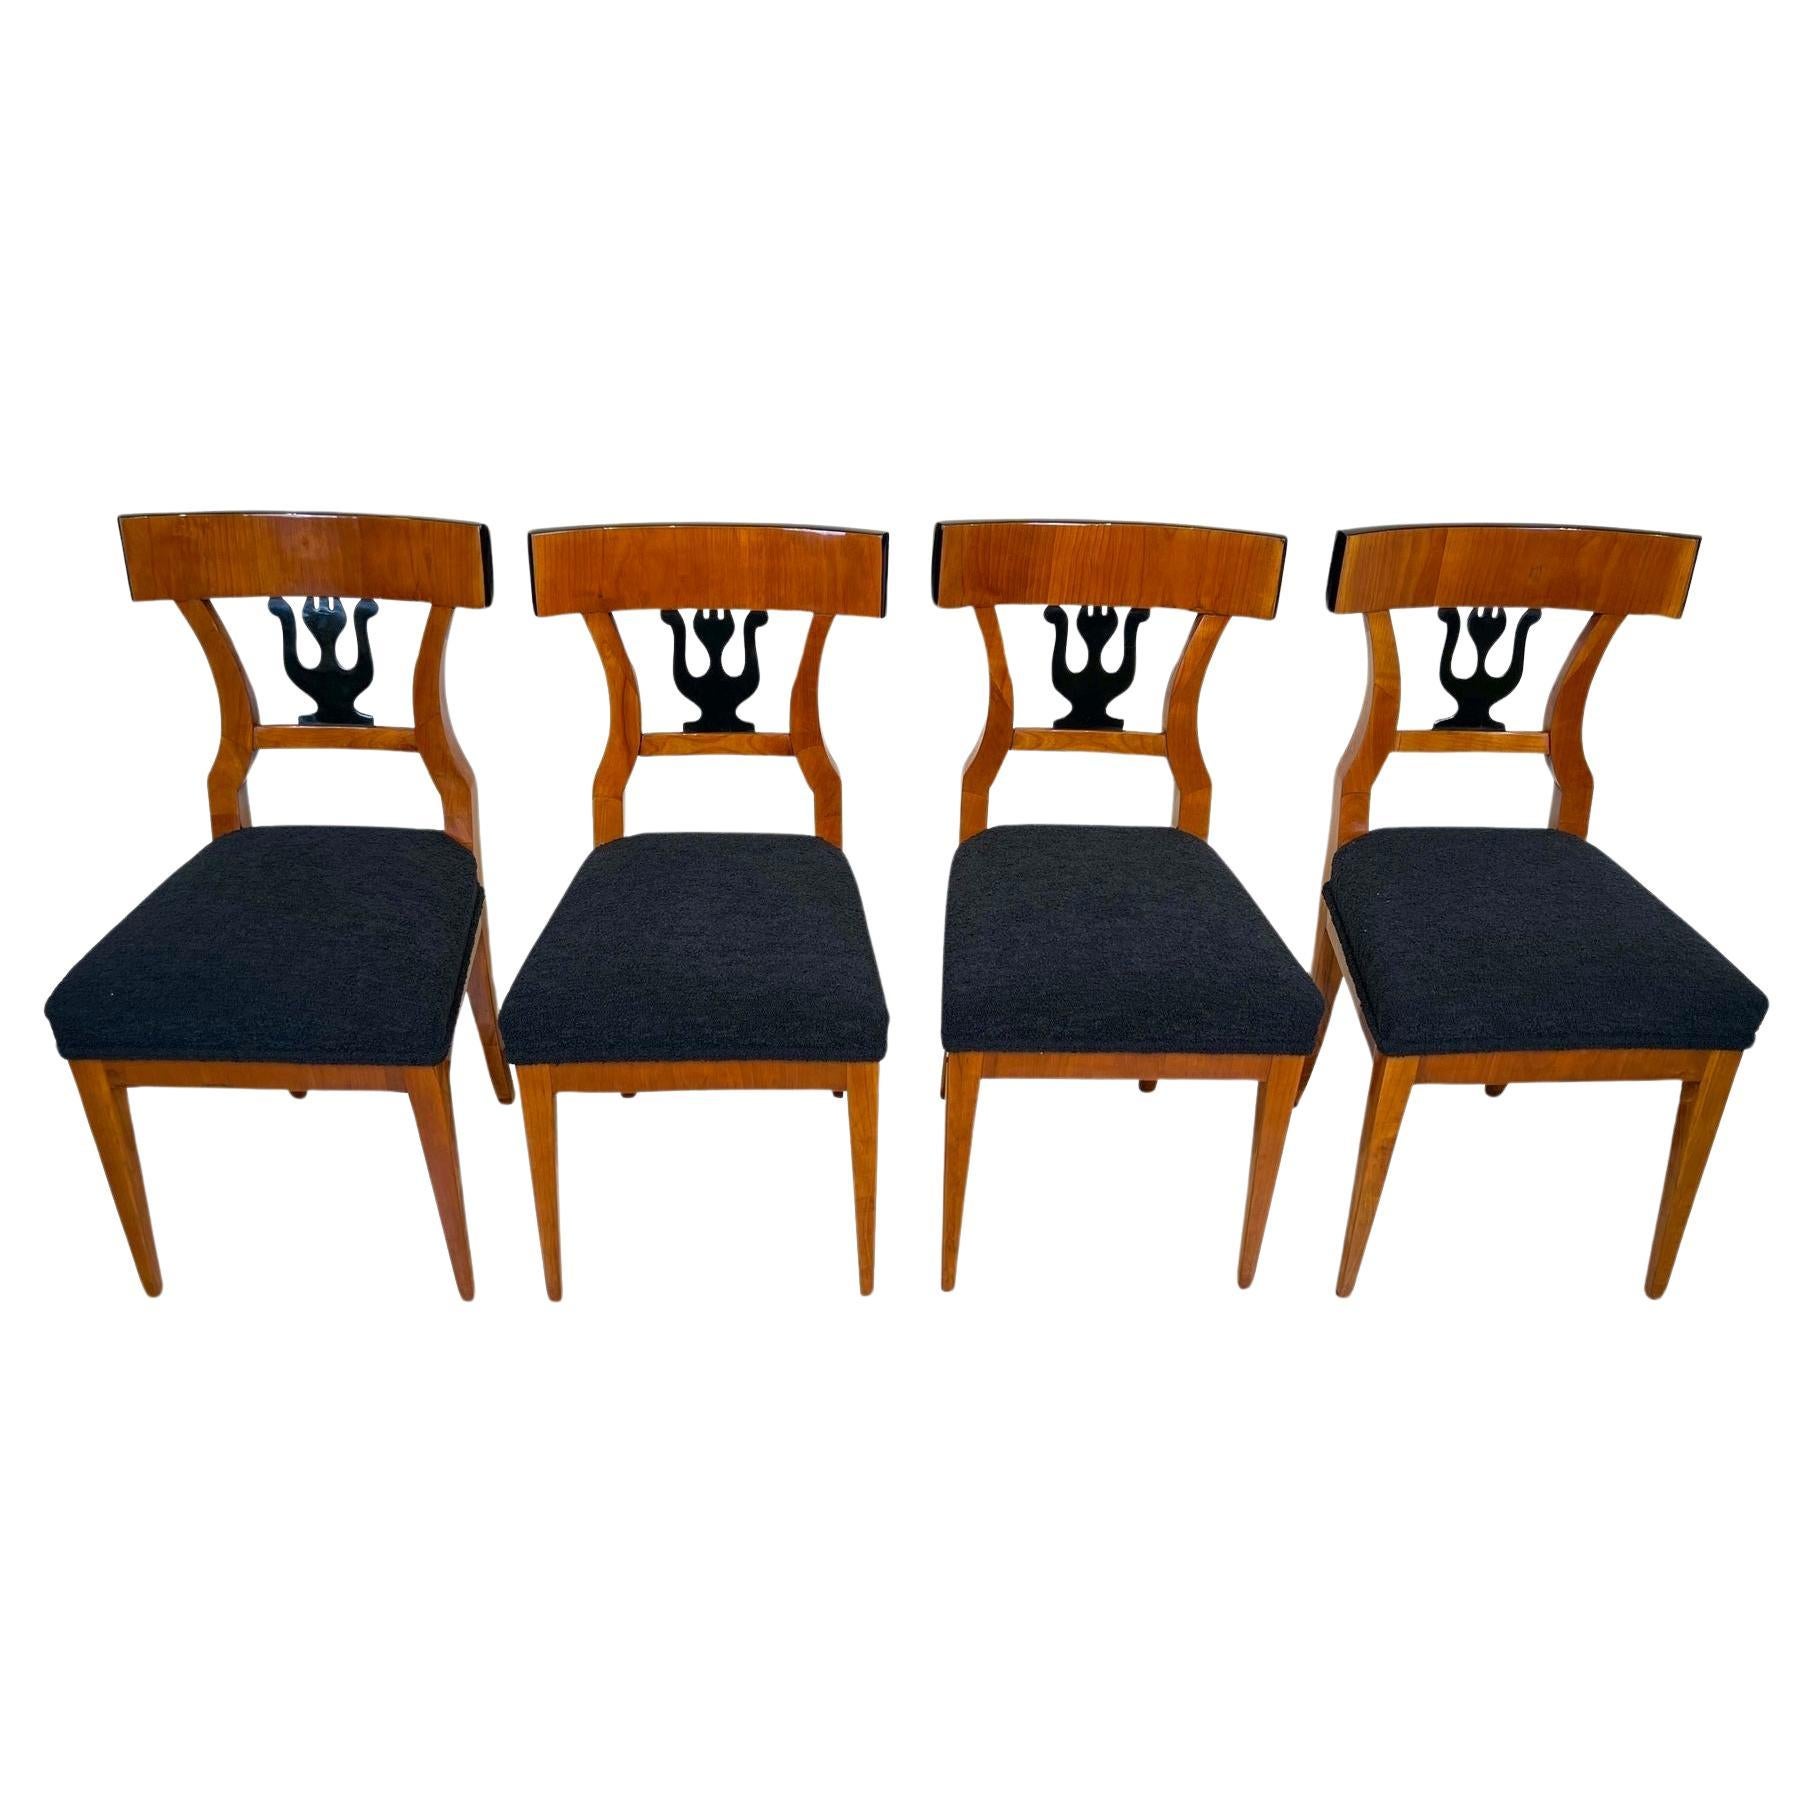 Set of Four Biedermeier Chairs, Cherry Veneer, South Germany circa 1830